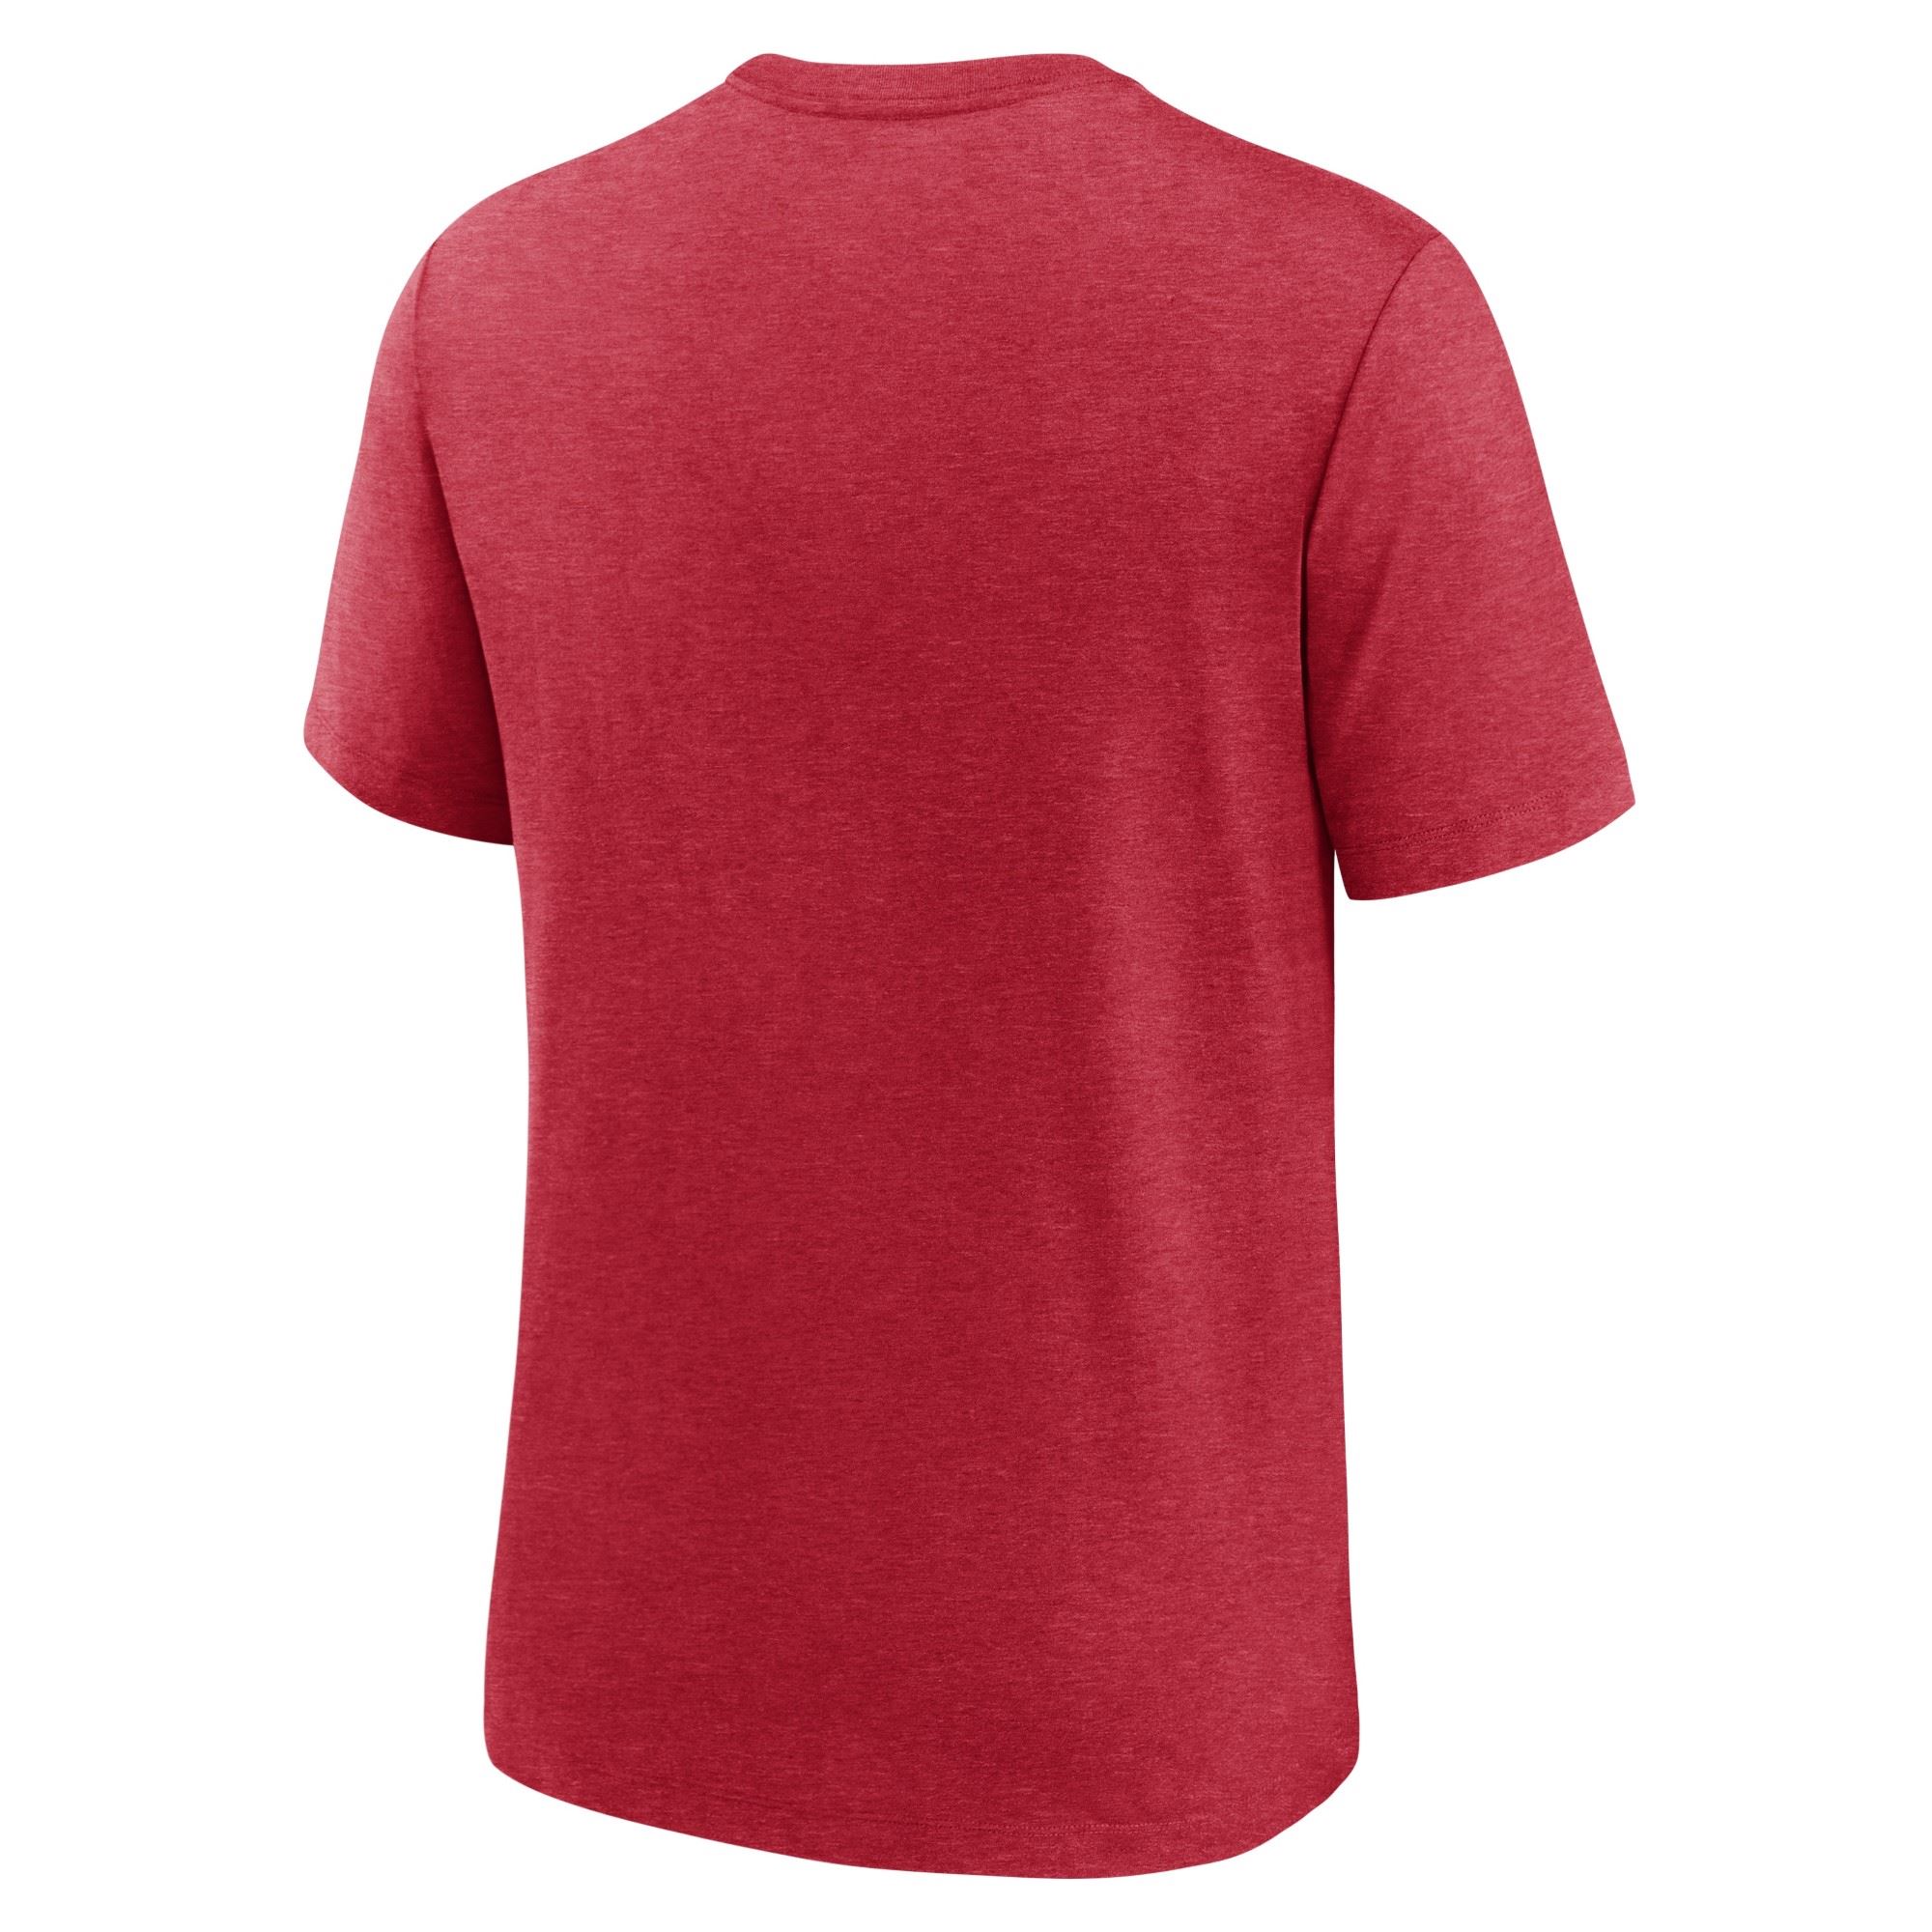 San Francisco 49ers NFL Triblend Team Name Fashion Red Heather T-Shirt Nike